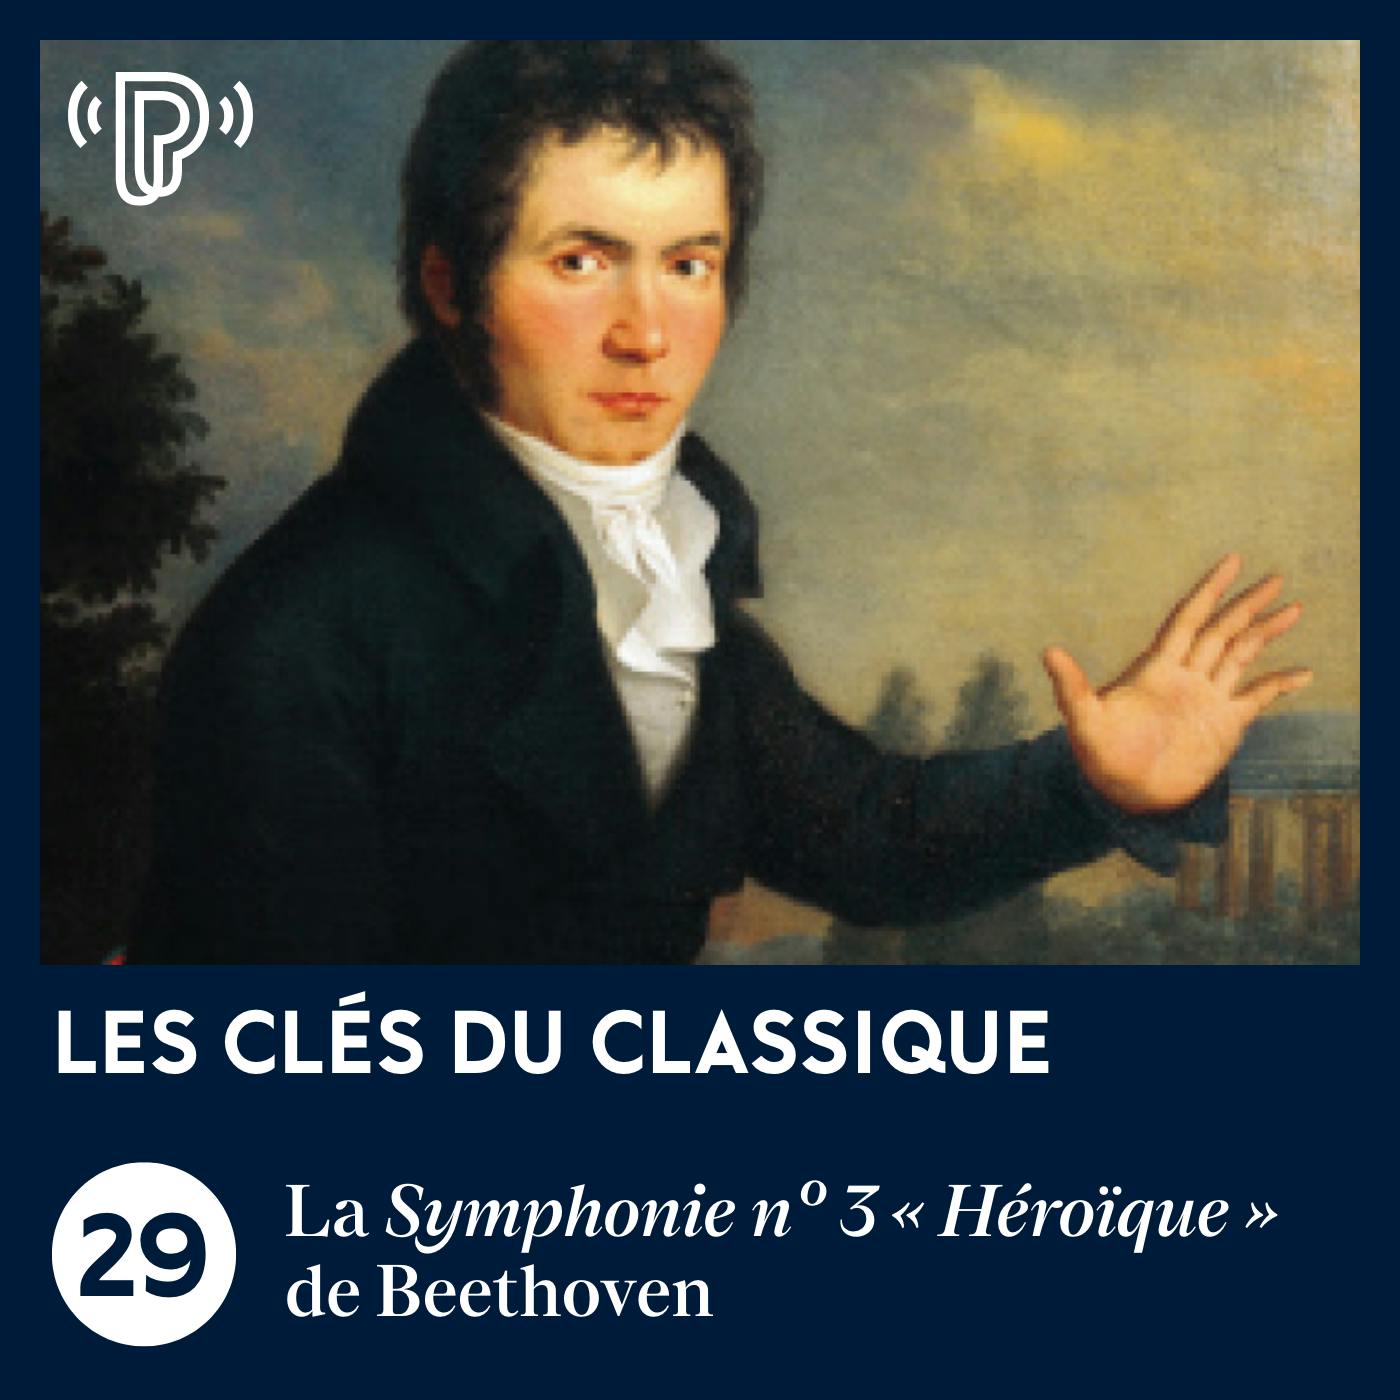 La Symphonie n° 3 « Héroïque » de Beethoven | Les Clés du classique #29